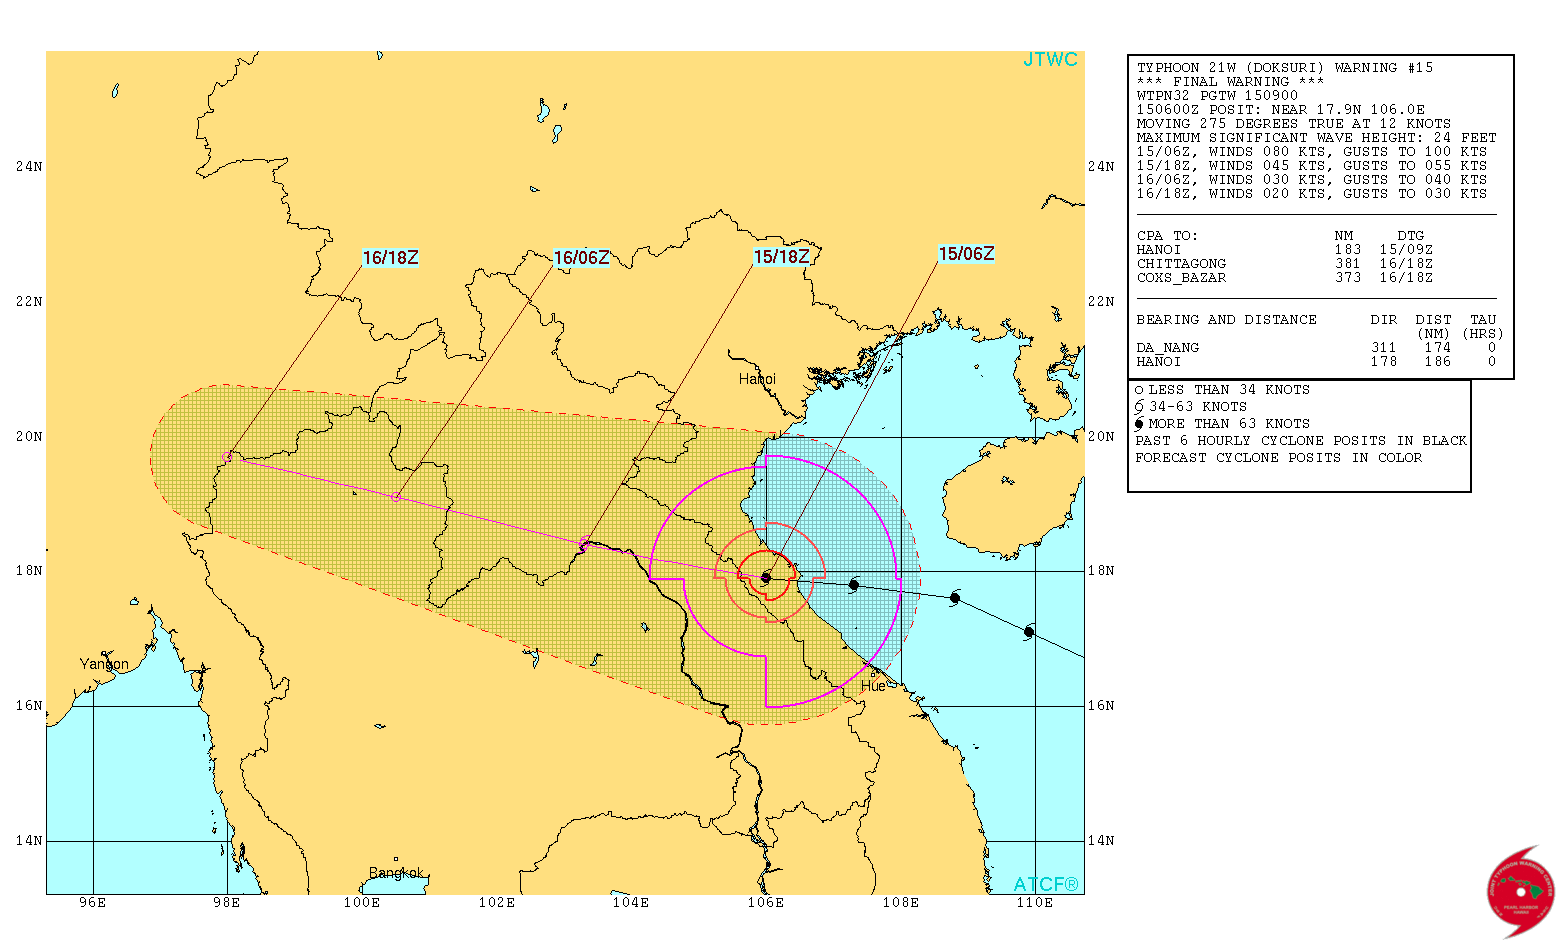 Typhoon Doksuri forecast track by JTWC on September 15, 2017